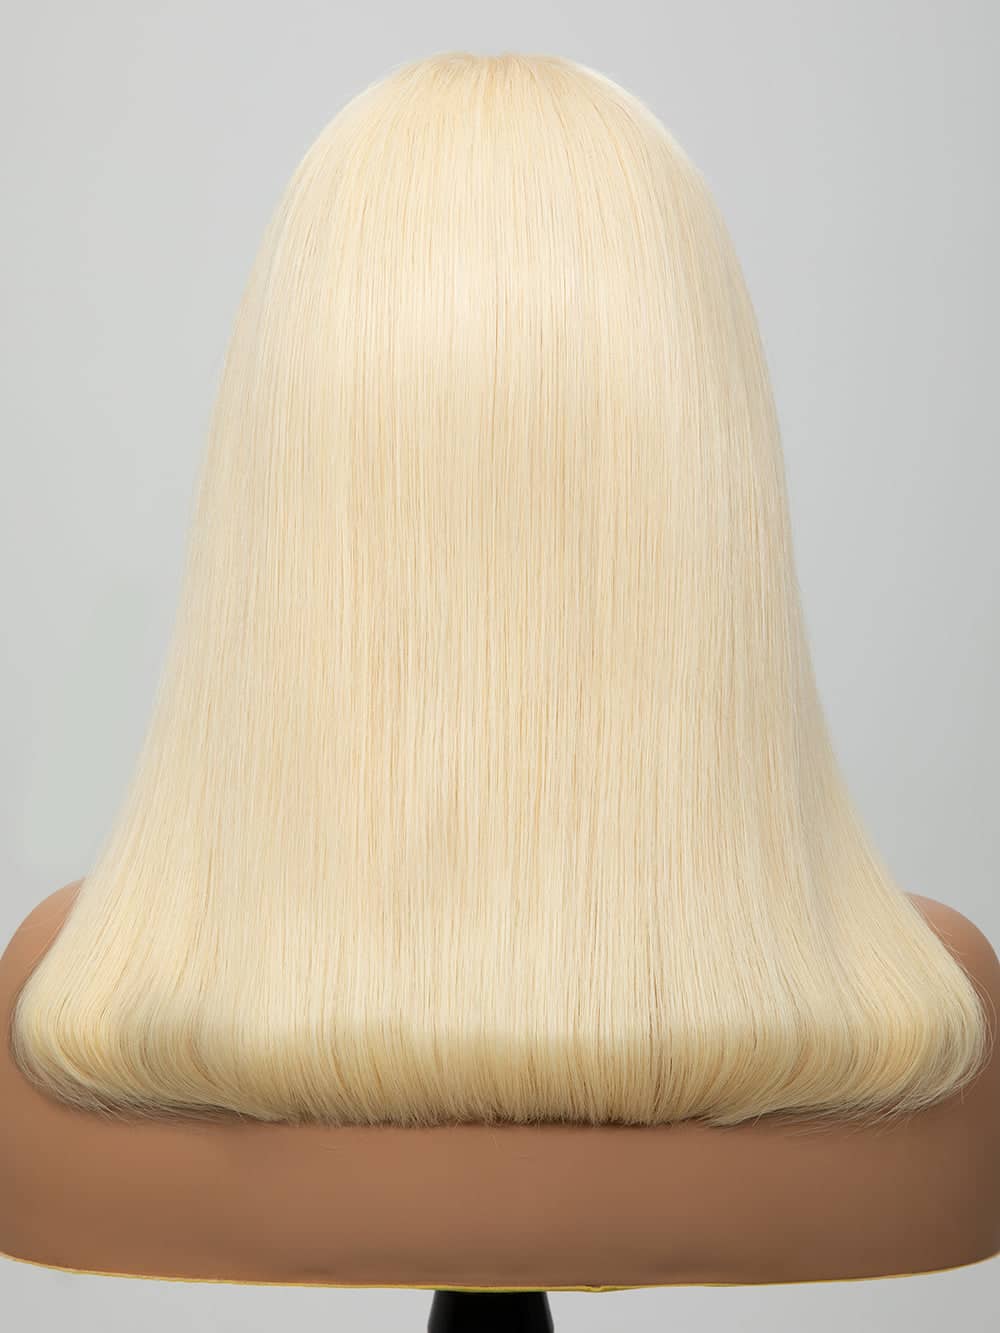 Keswigs Blonde color 4x4 transparent lace closure wig 180% density human hair wigs